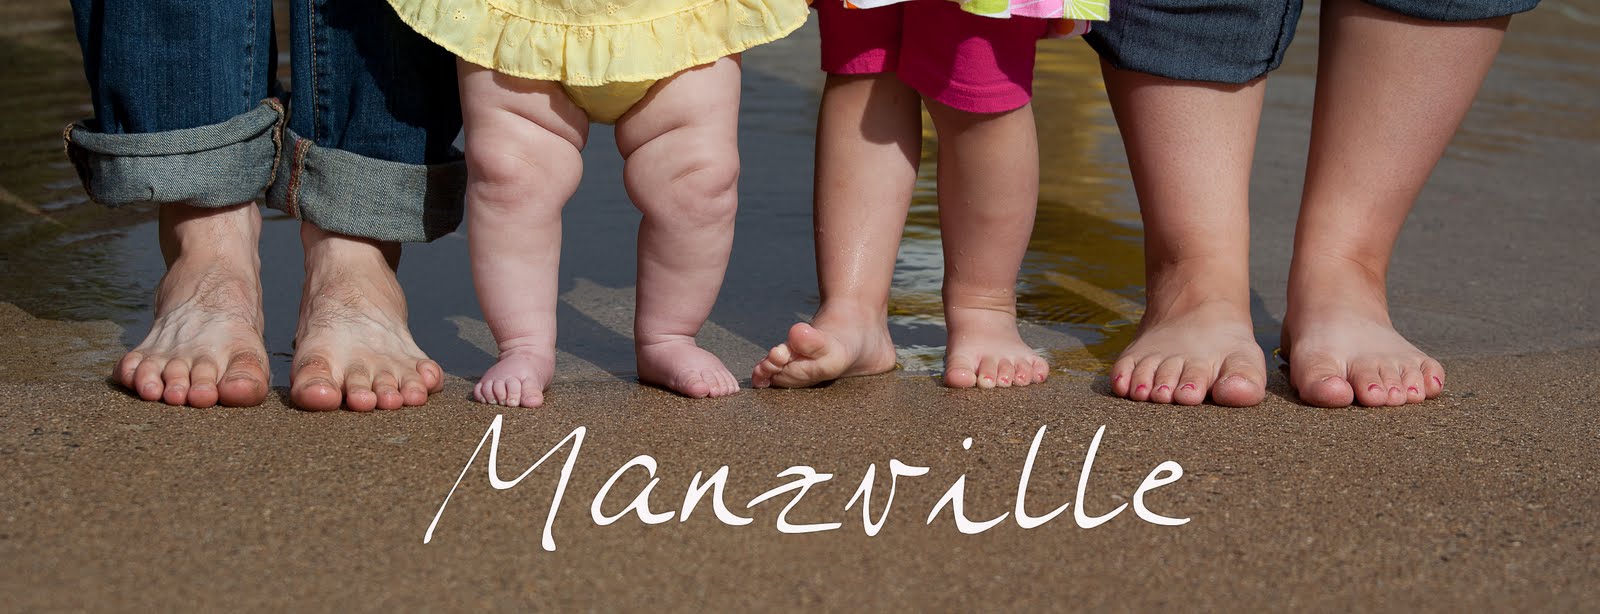 Manzville